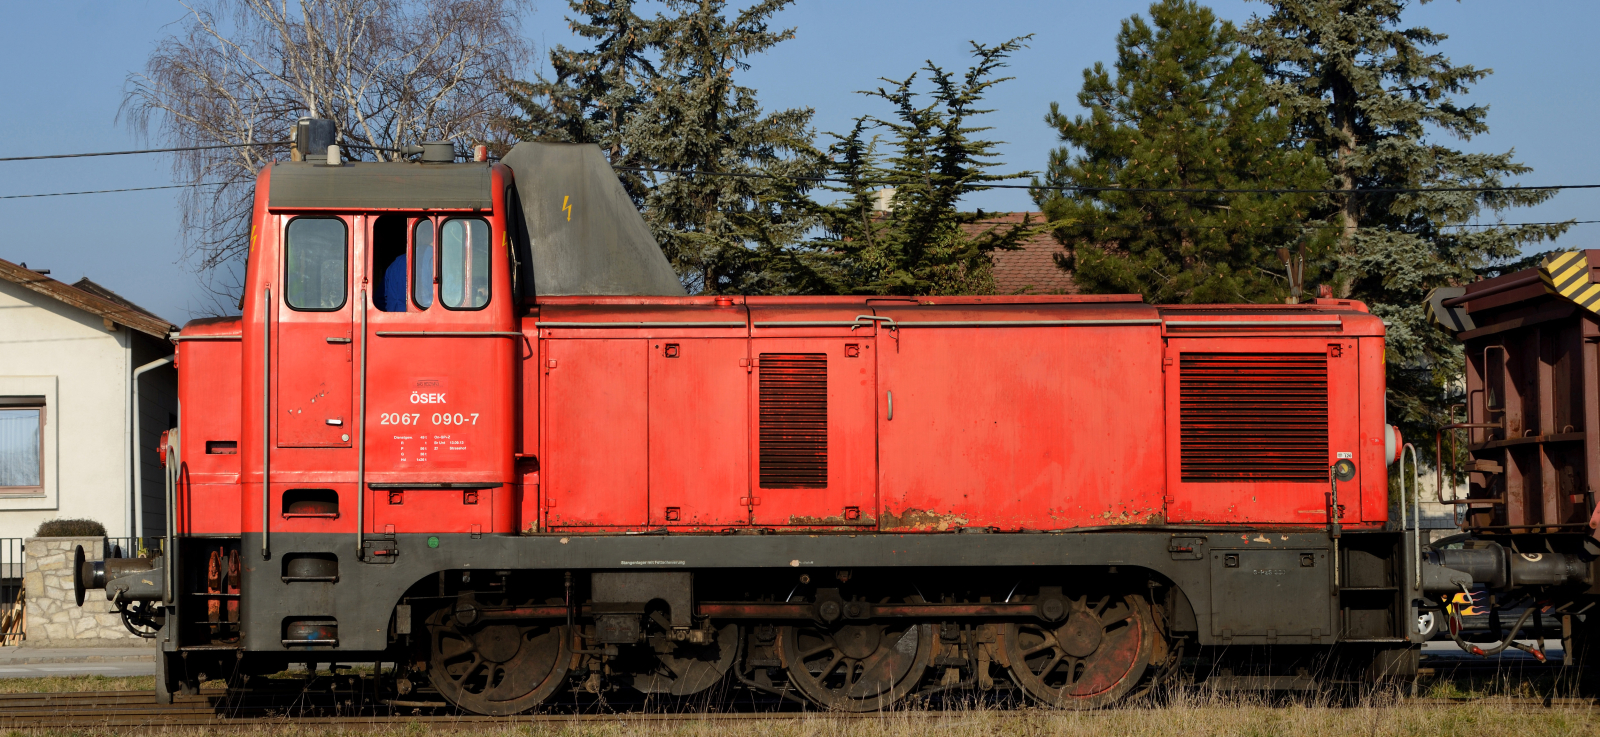 2067 090 of the Strasshof Railway Museum in February 2014